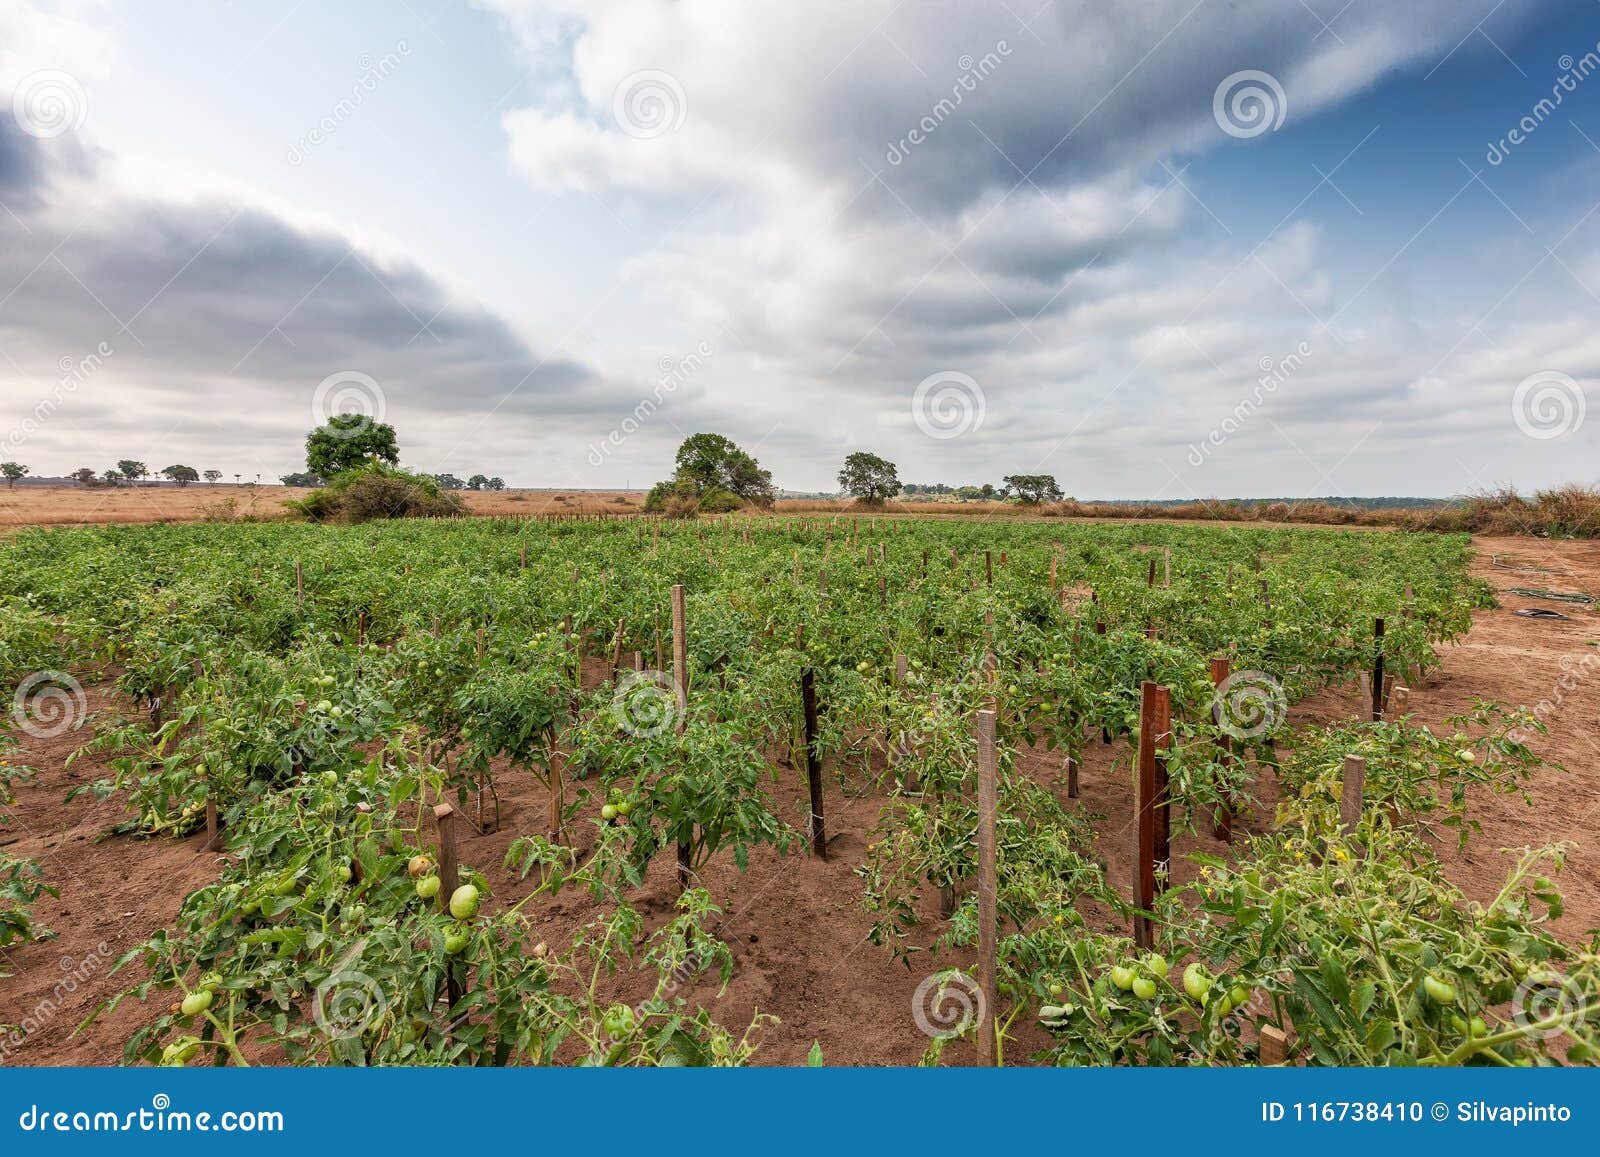 tomatoes plantation still green. cabinda. angola, africa,